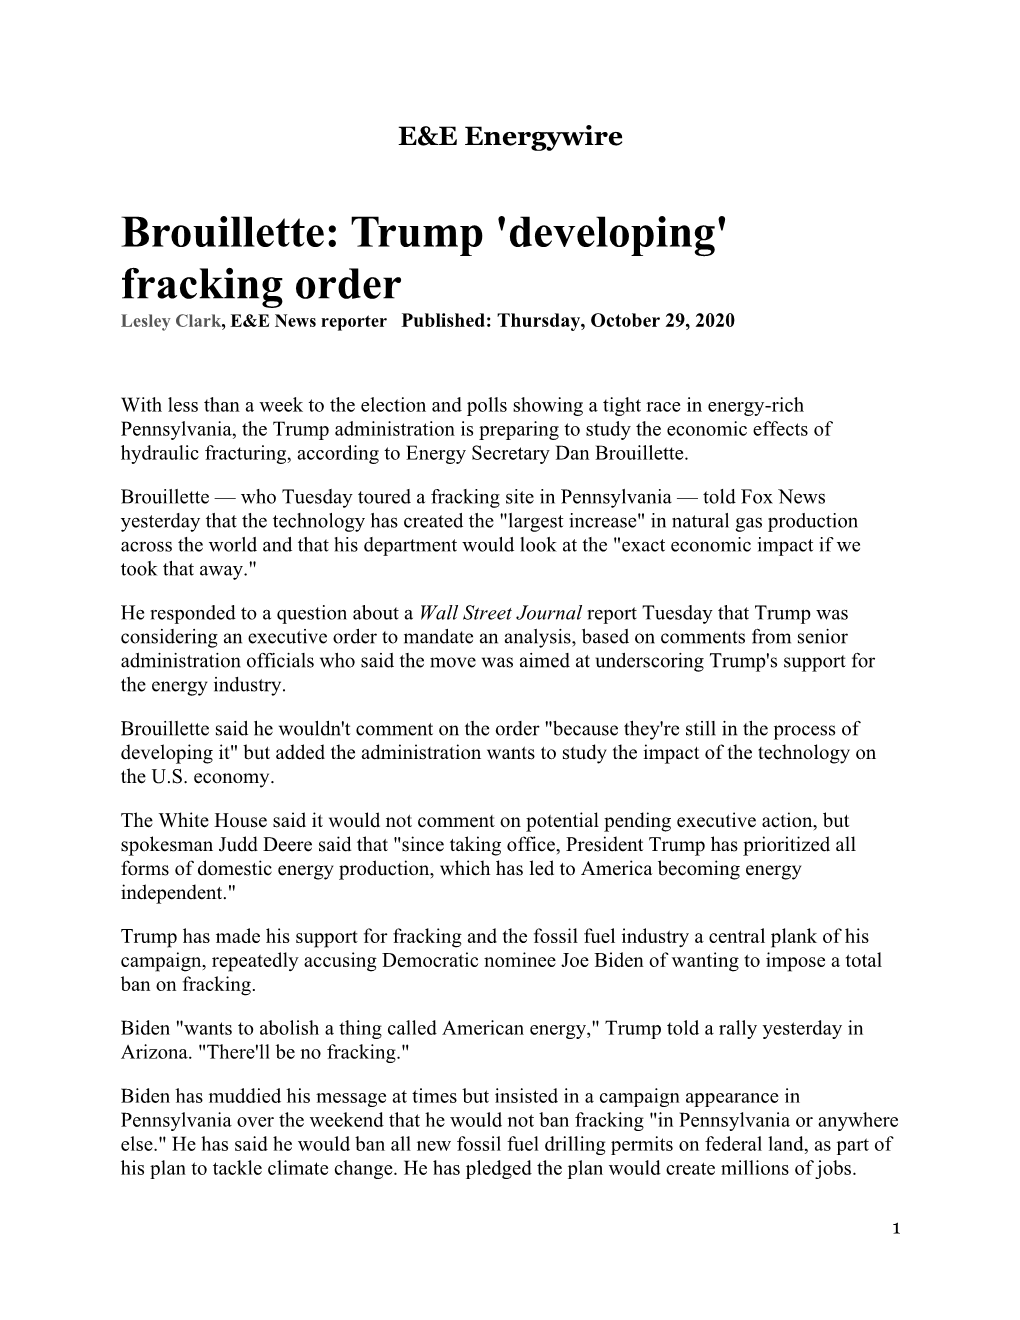 Brouillette: Trump 'Developing' Fracking Order Lesley Clark, E&E News Reporter Published: Thursday, October 29, 2020